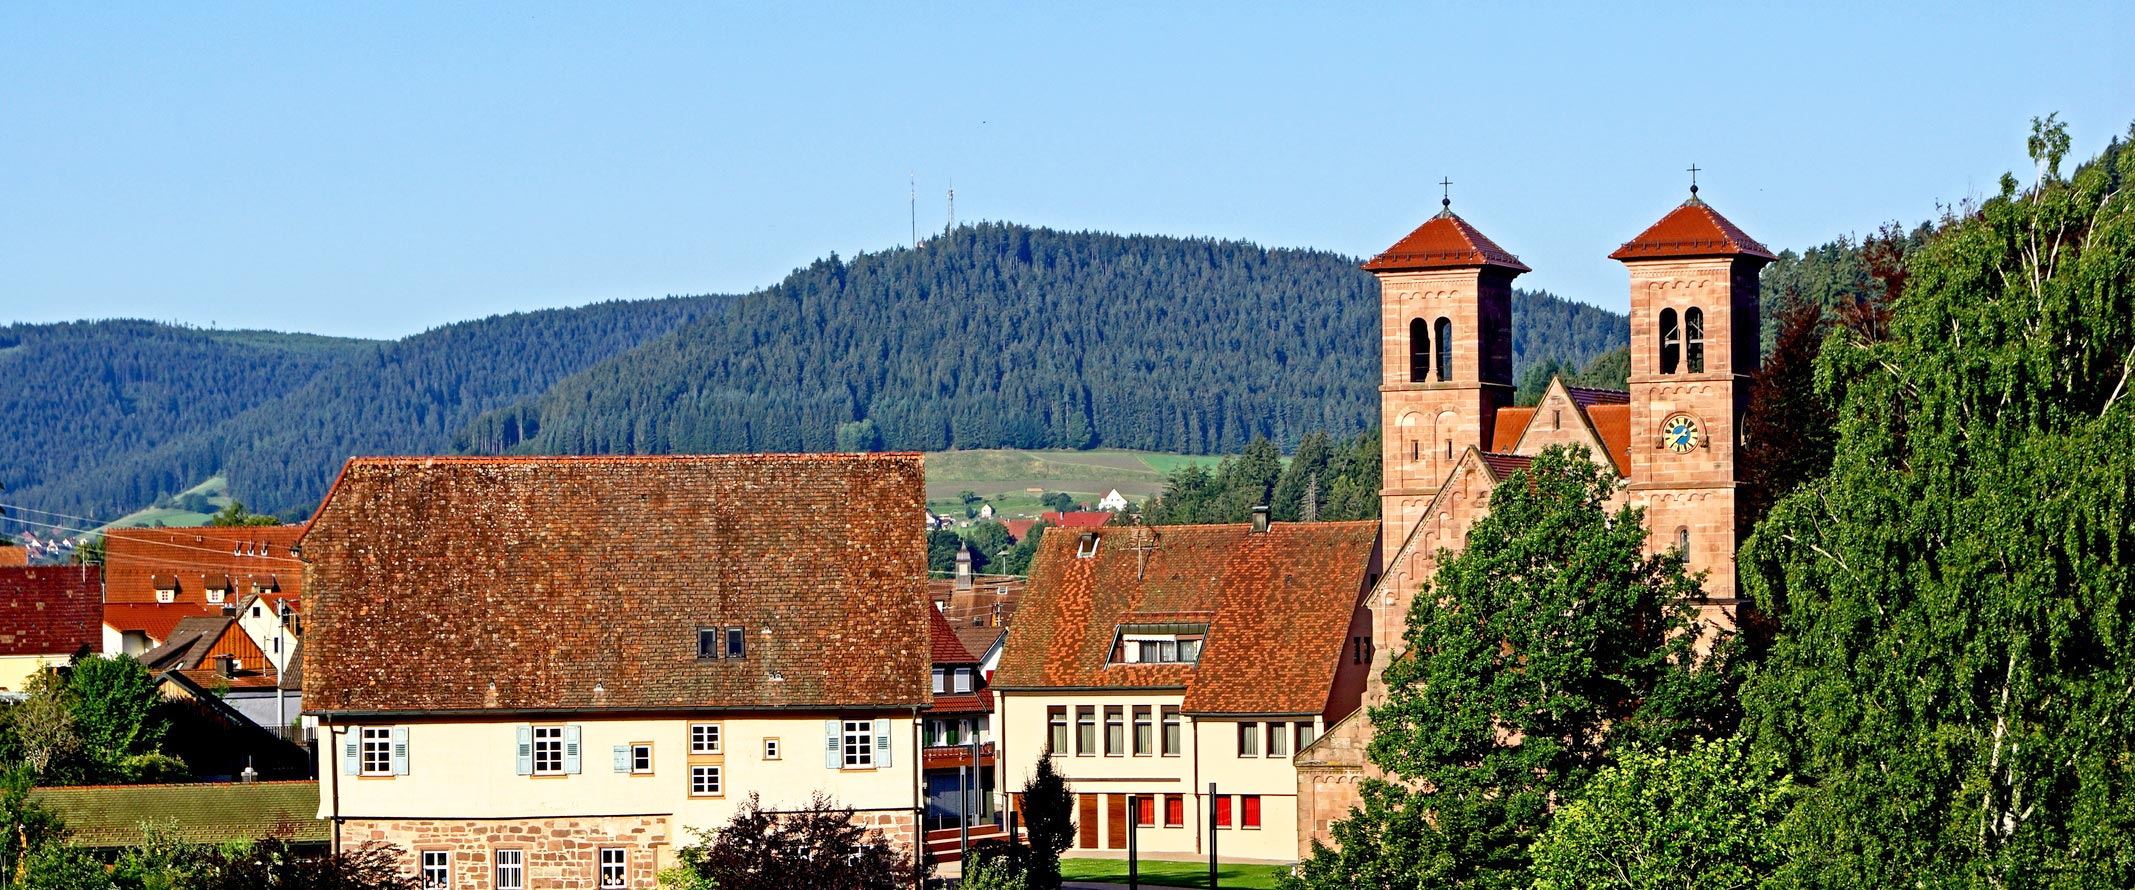 Baiersbronn - Kloster Reichenbach